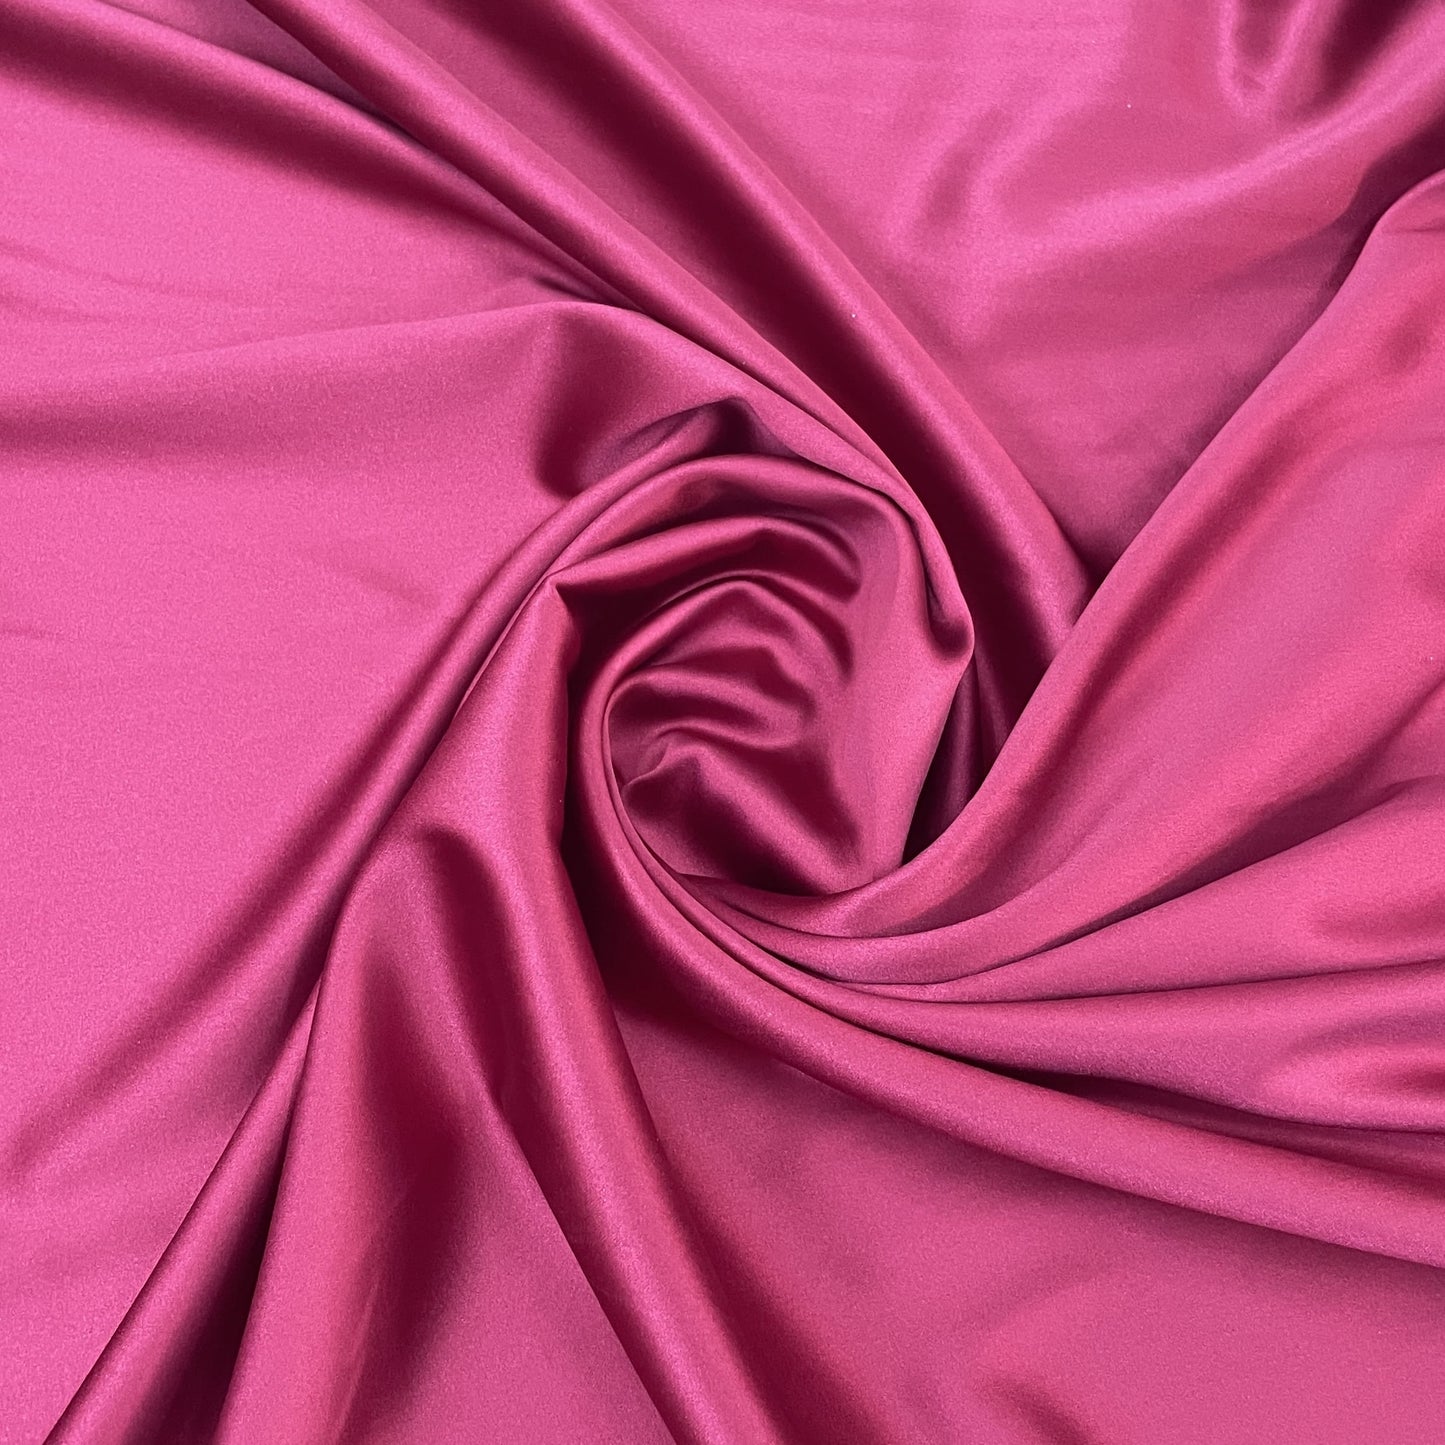 Exclusive Maroon Pink Solid Celina Satin Fabric